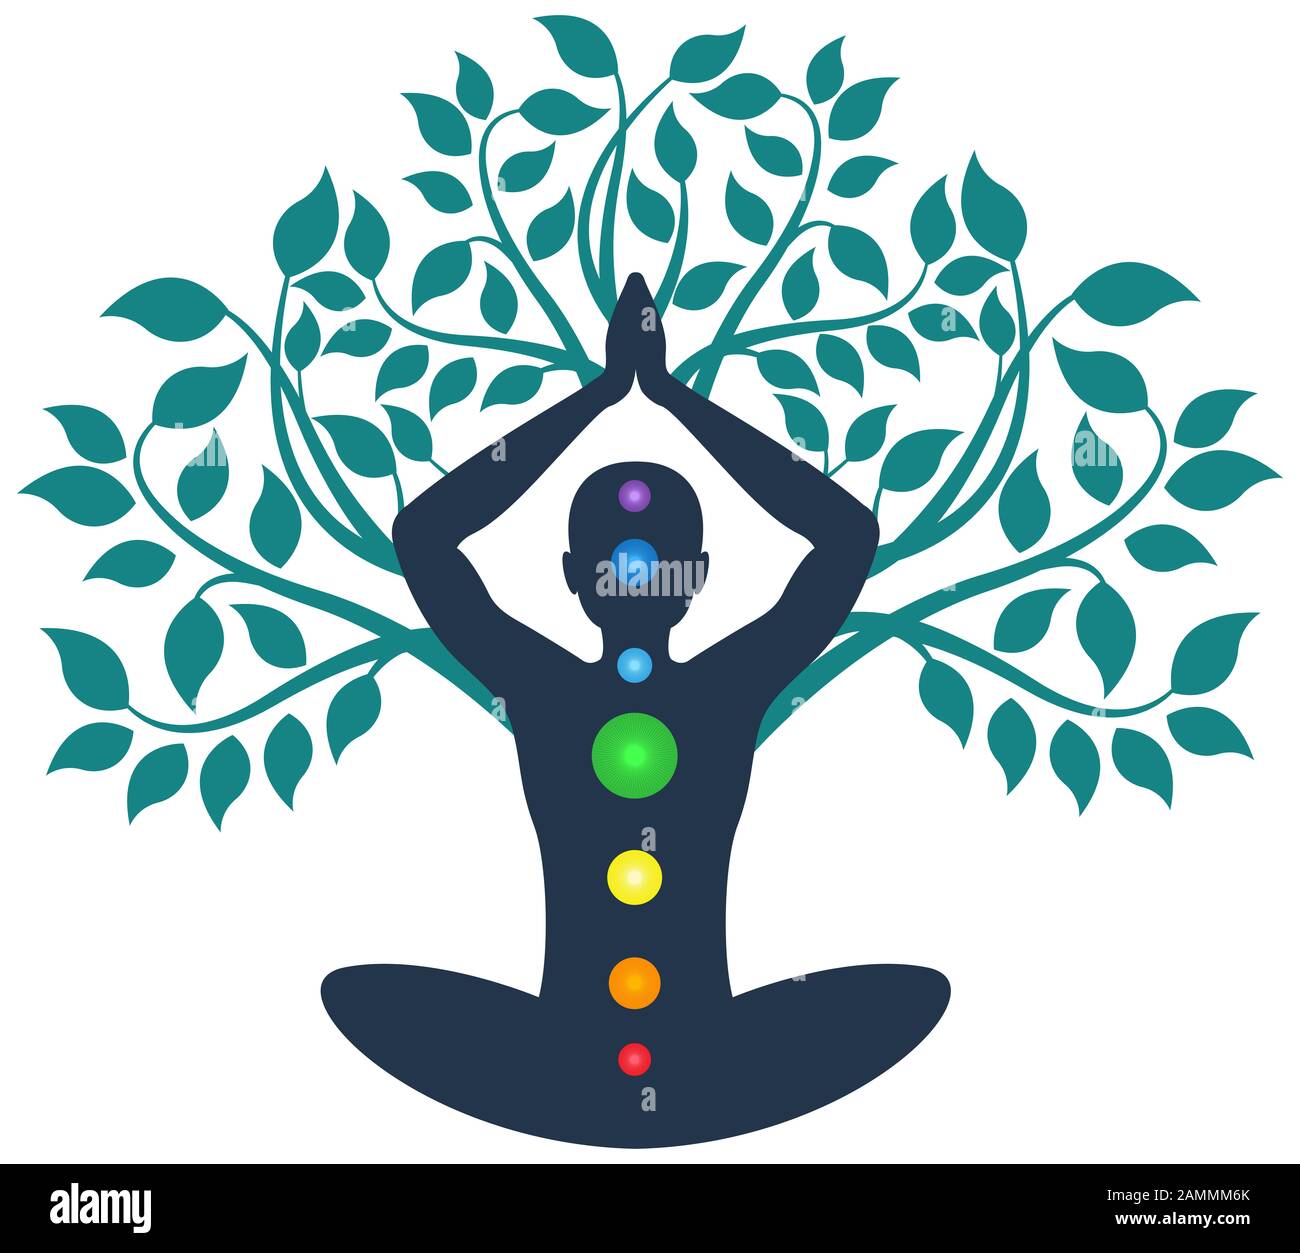 https://c8.alamy.com/comp/2AMMM6K/tree-yoga-logo-2AMMM6K.jpg